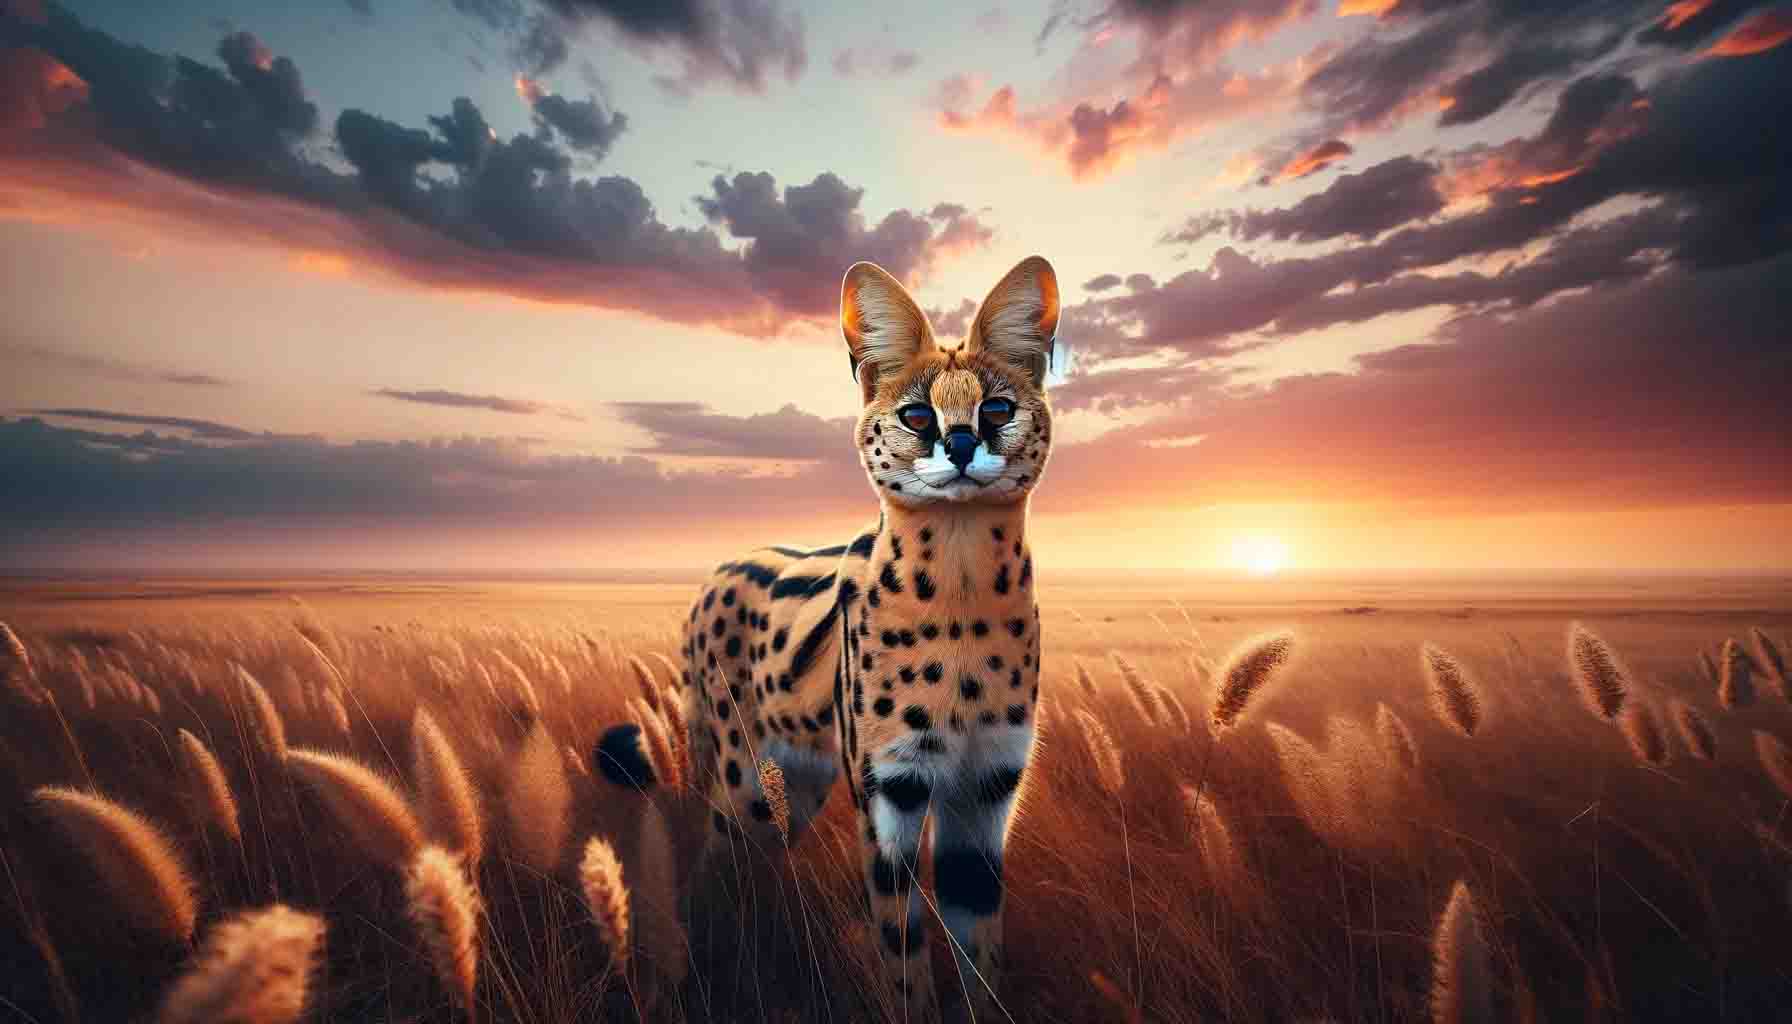 Can a serval cat kill a human